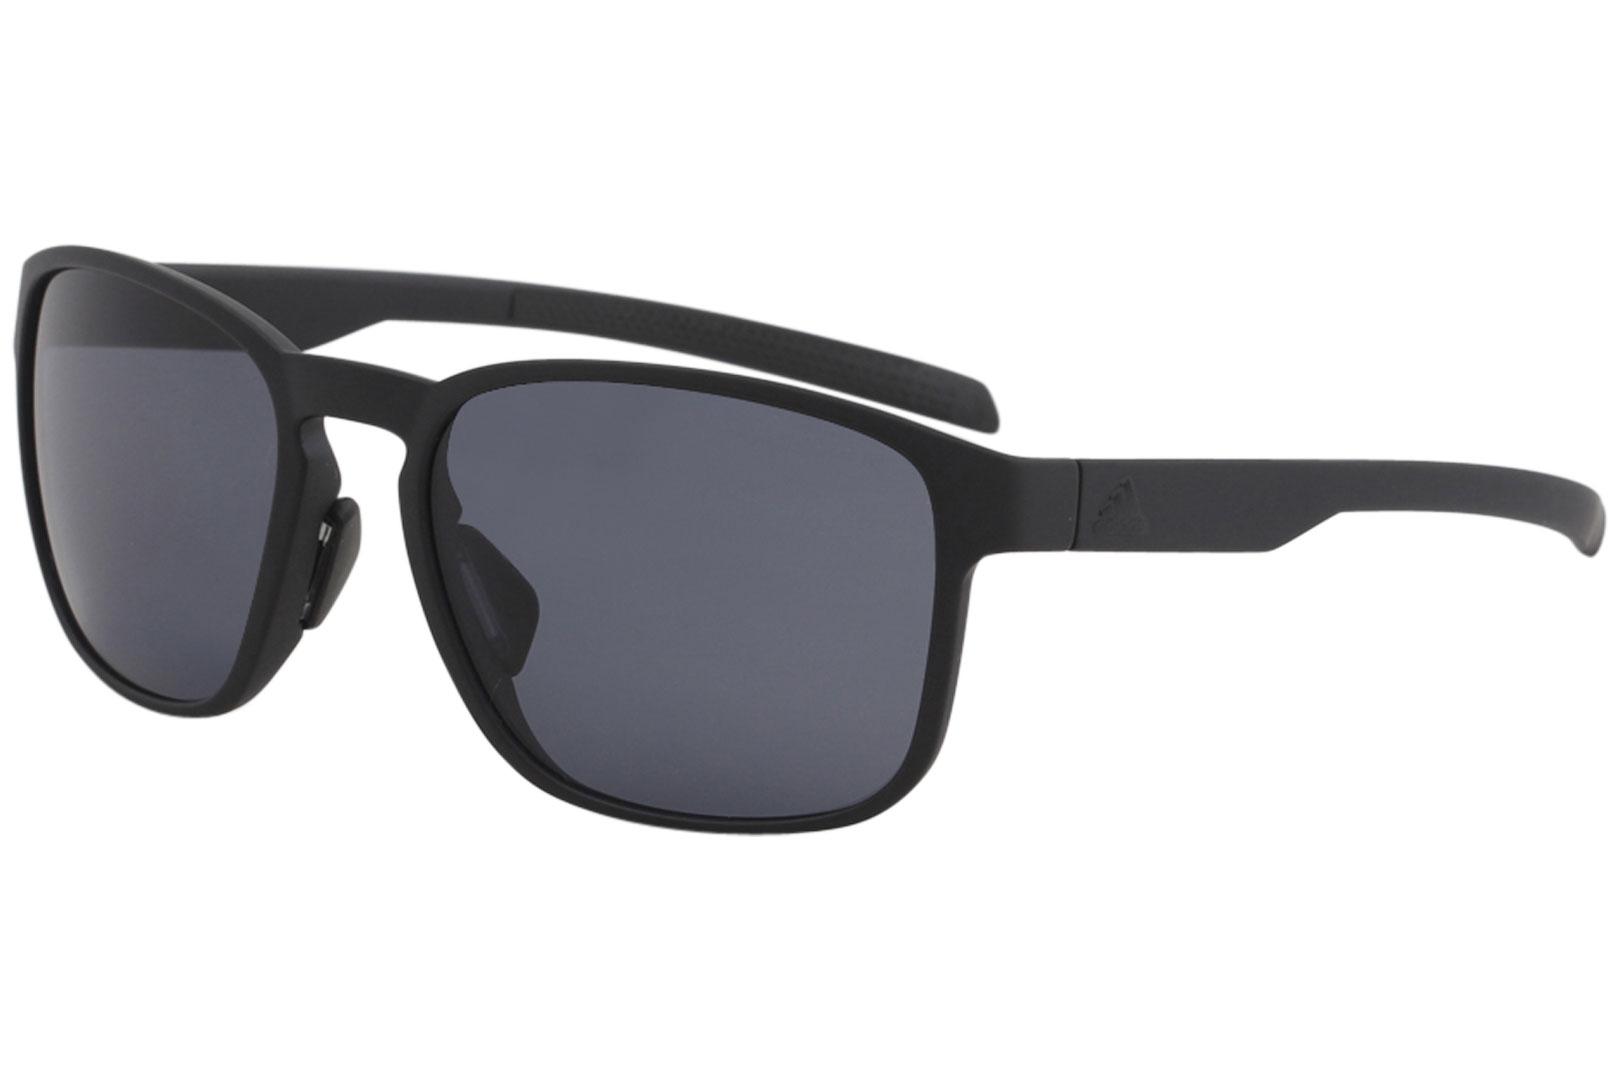 Adidas Protean AD32 AD/32 6500 Matte Coal Grey Square Sunglasses 56mm | EyeSpecs.com